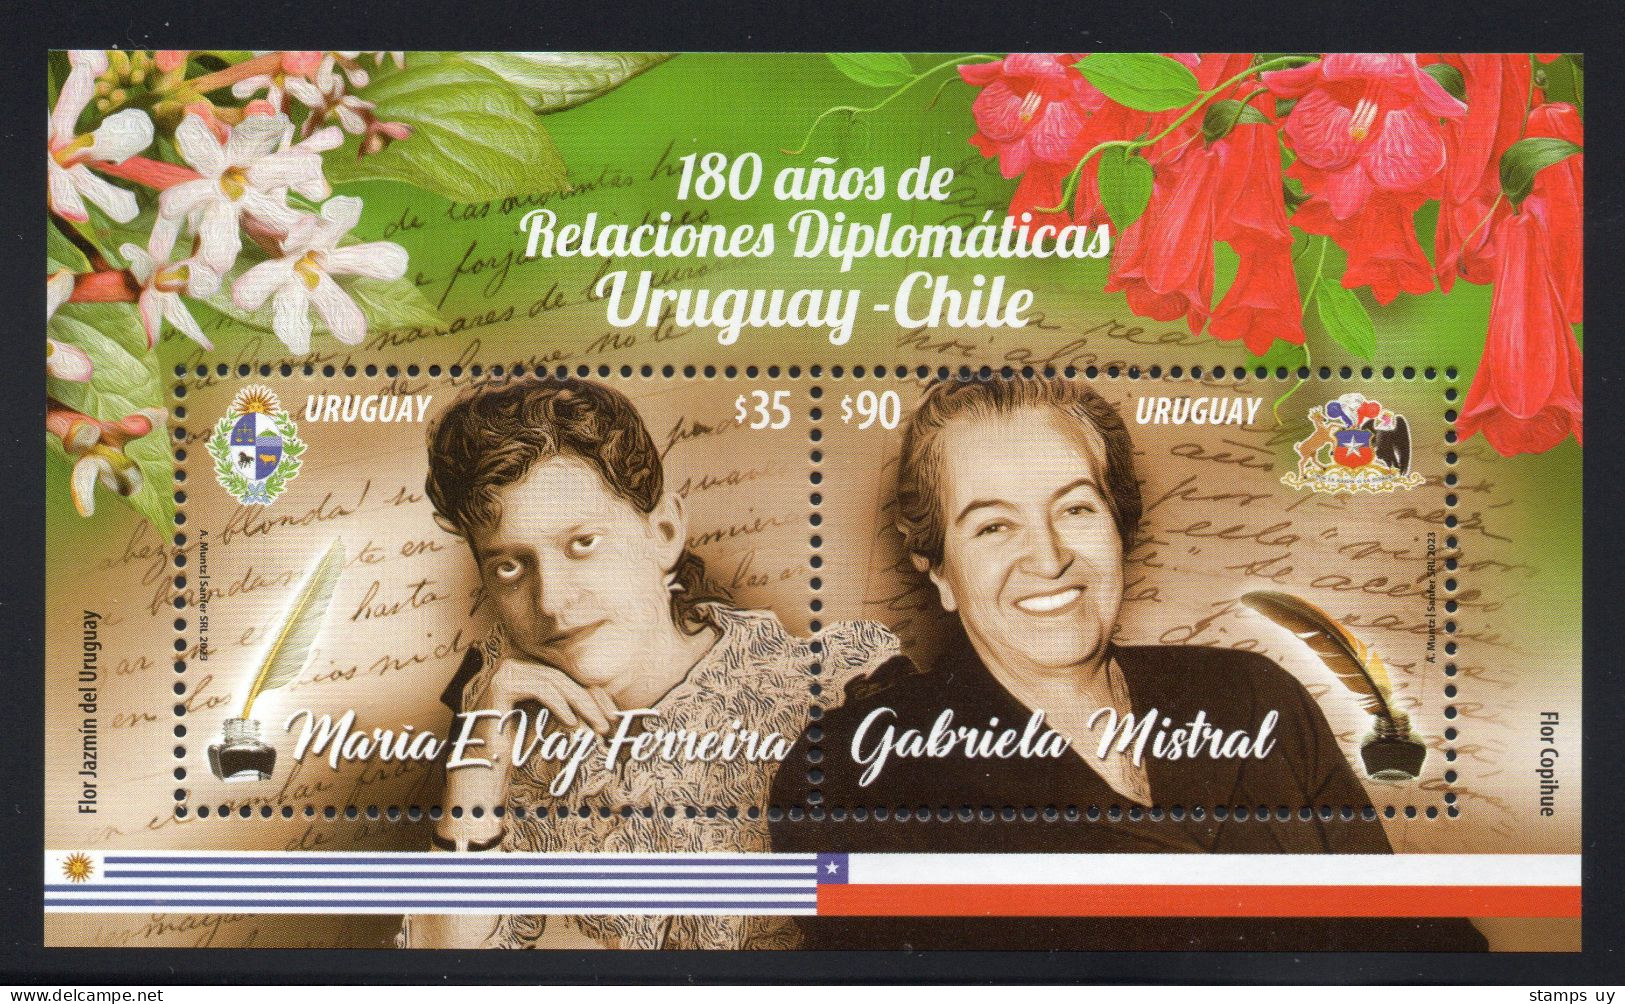 URUGUAY 2023 (Diplomacy, Chile, Poets, M E Vaz Ferreira, Gabriela Mistral, Nobel Prize, Literature, Flowers) - 1 Block - Briefmarken